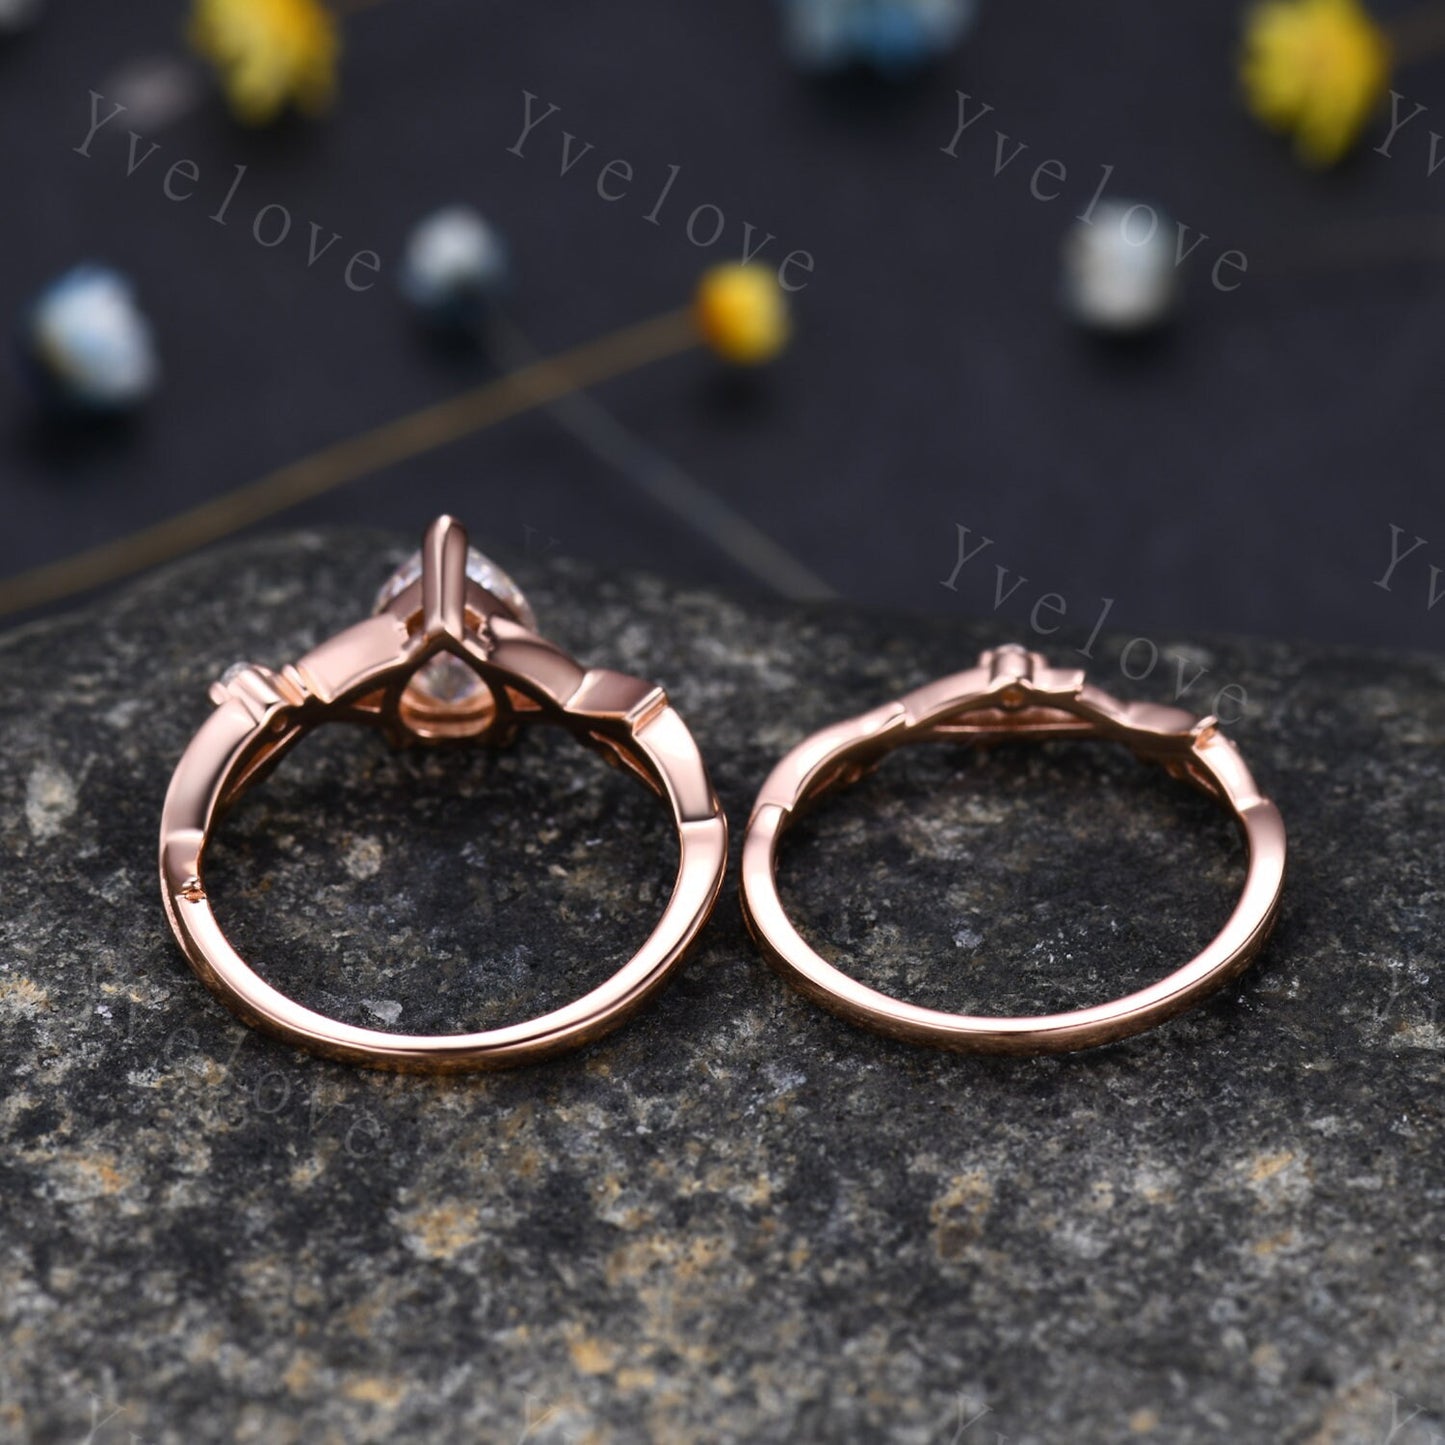 Unique Teardrop Moissanite Ring Set,Vintage Twig Diamond Engagement Ring Set,Branch Ring Set Gold,Twisted Ring Bridal Set,Dainty Ring Set